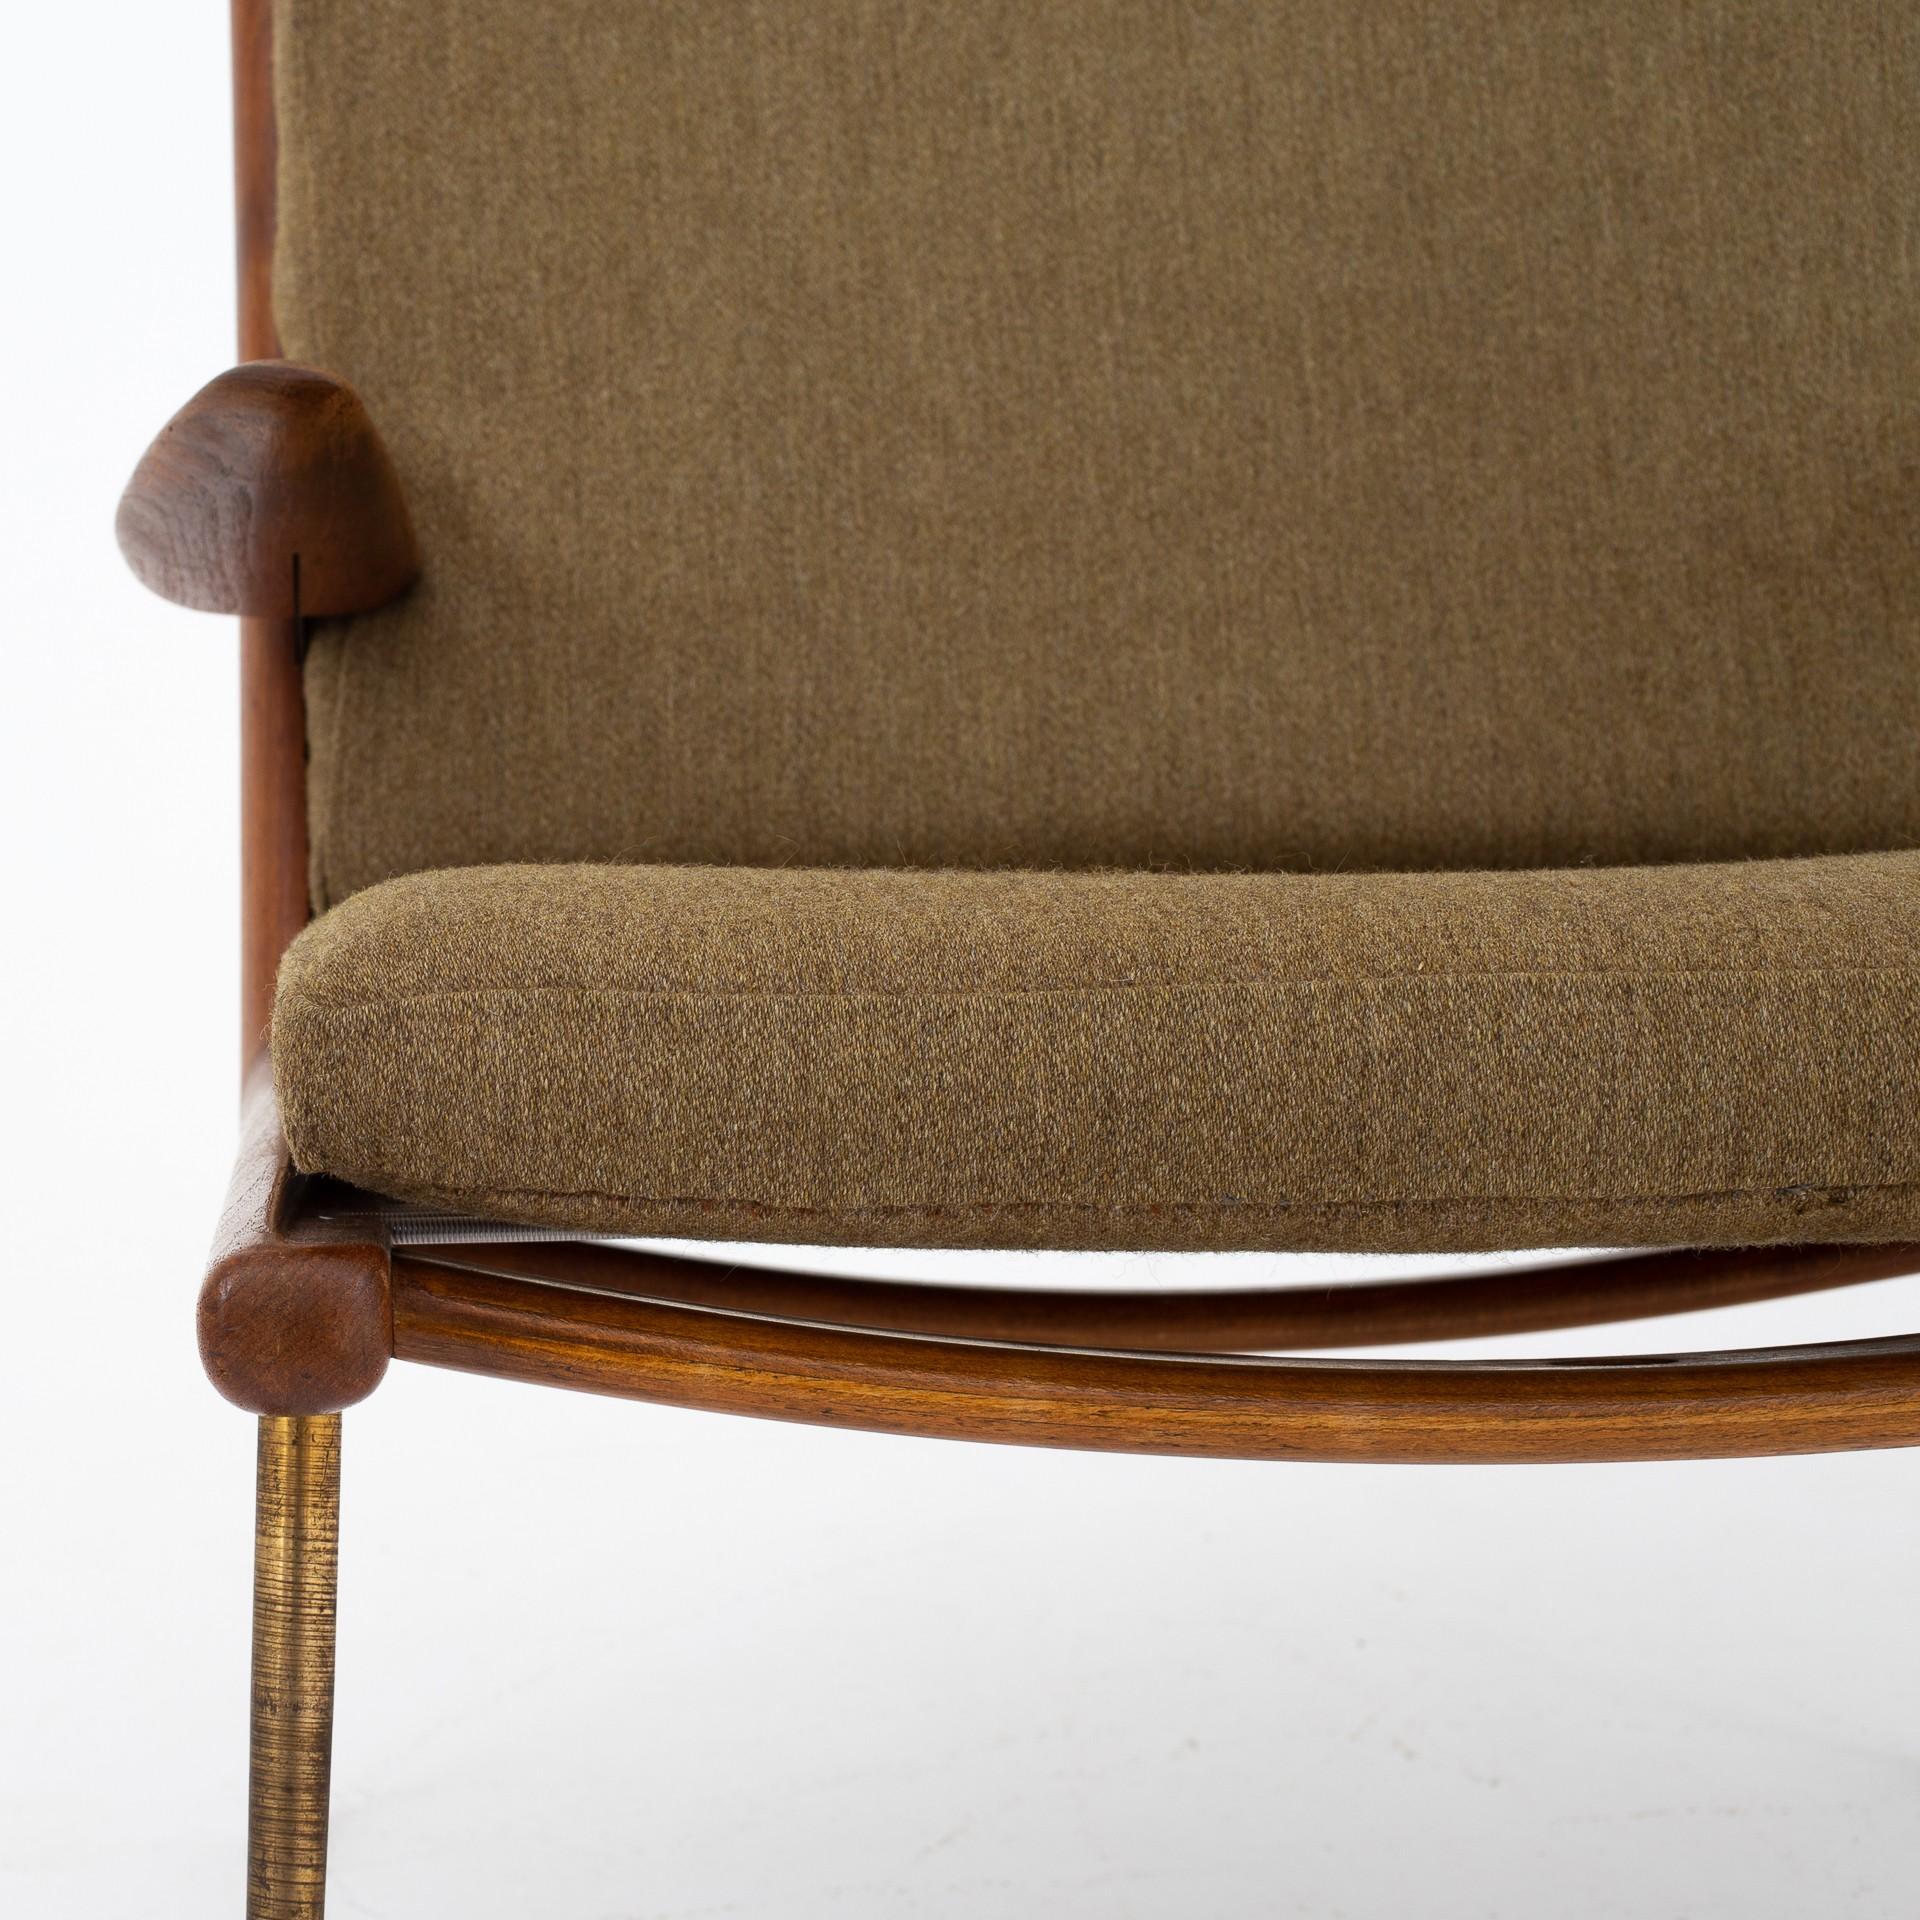 20th Century Boomerang Chair by Peter Hvidt / Orla M. Mølgaard